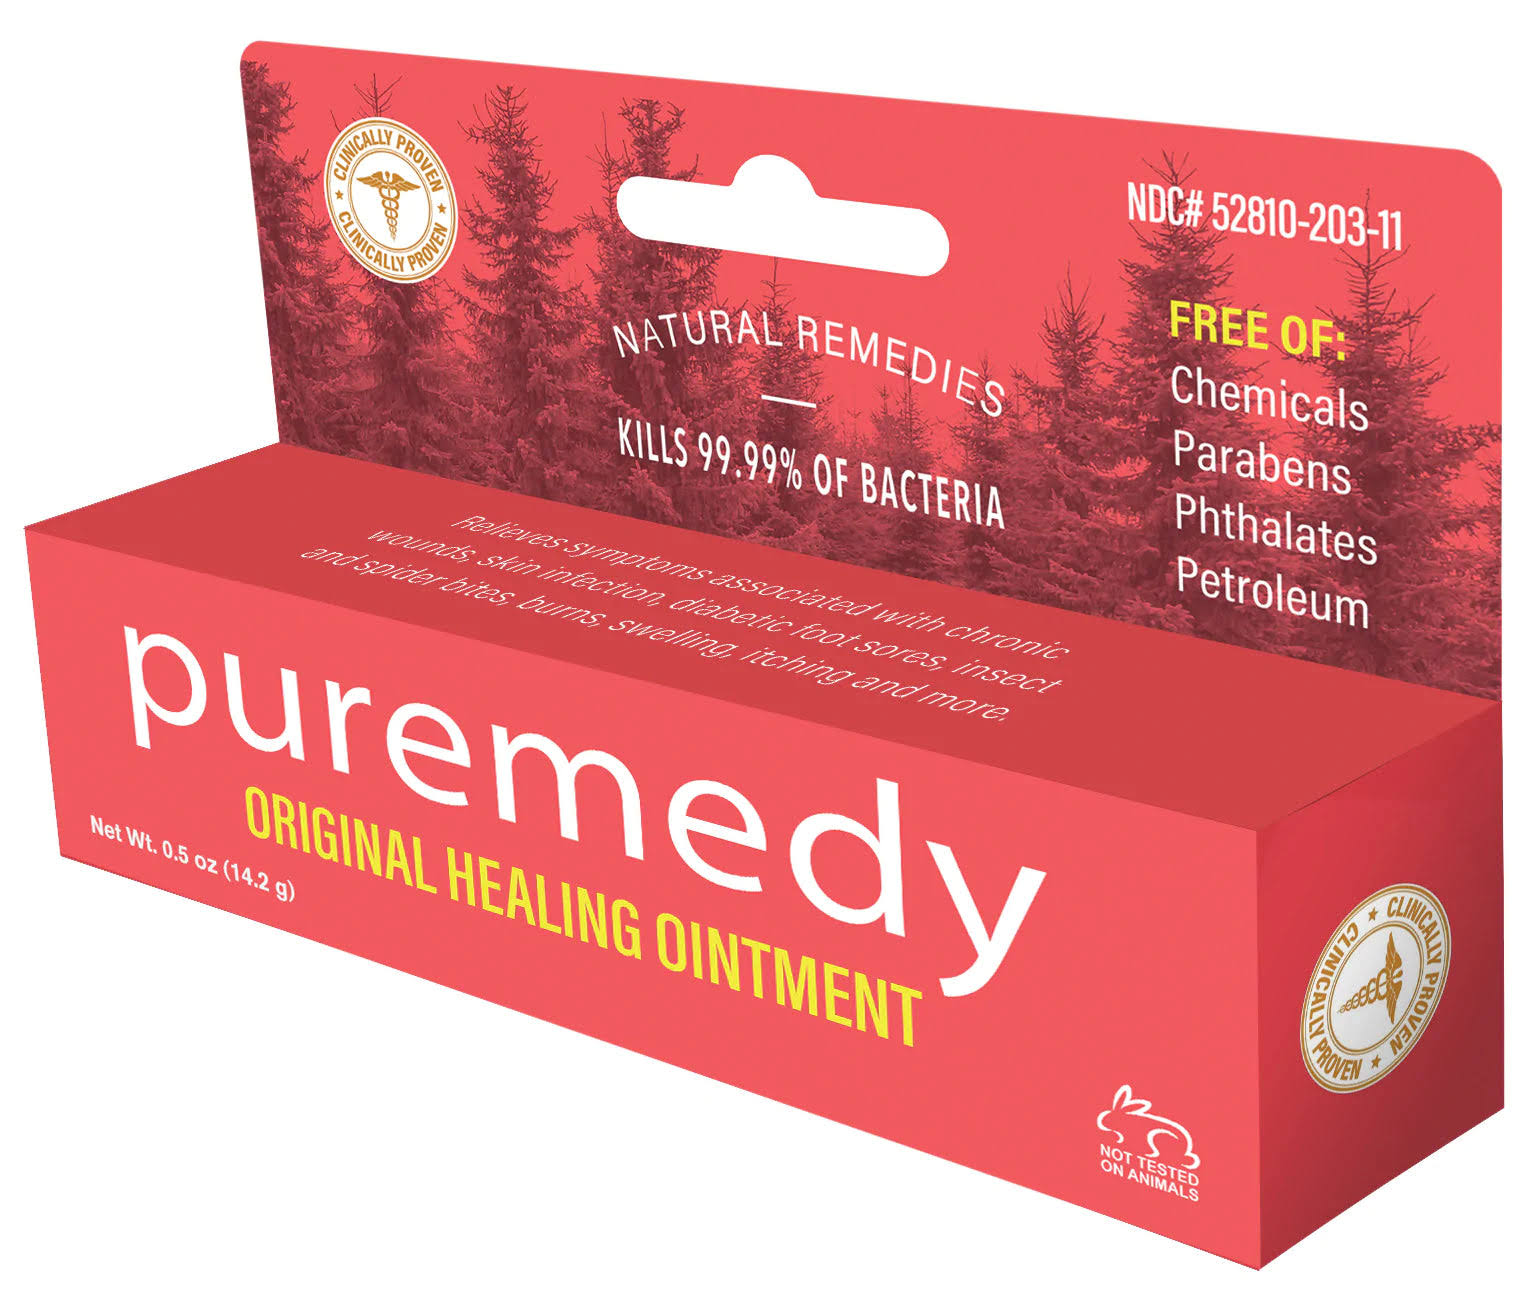 Puremedy Original Healing Ointment - 0.5 oz (14 g)